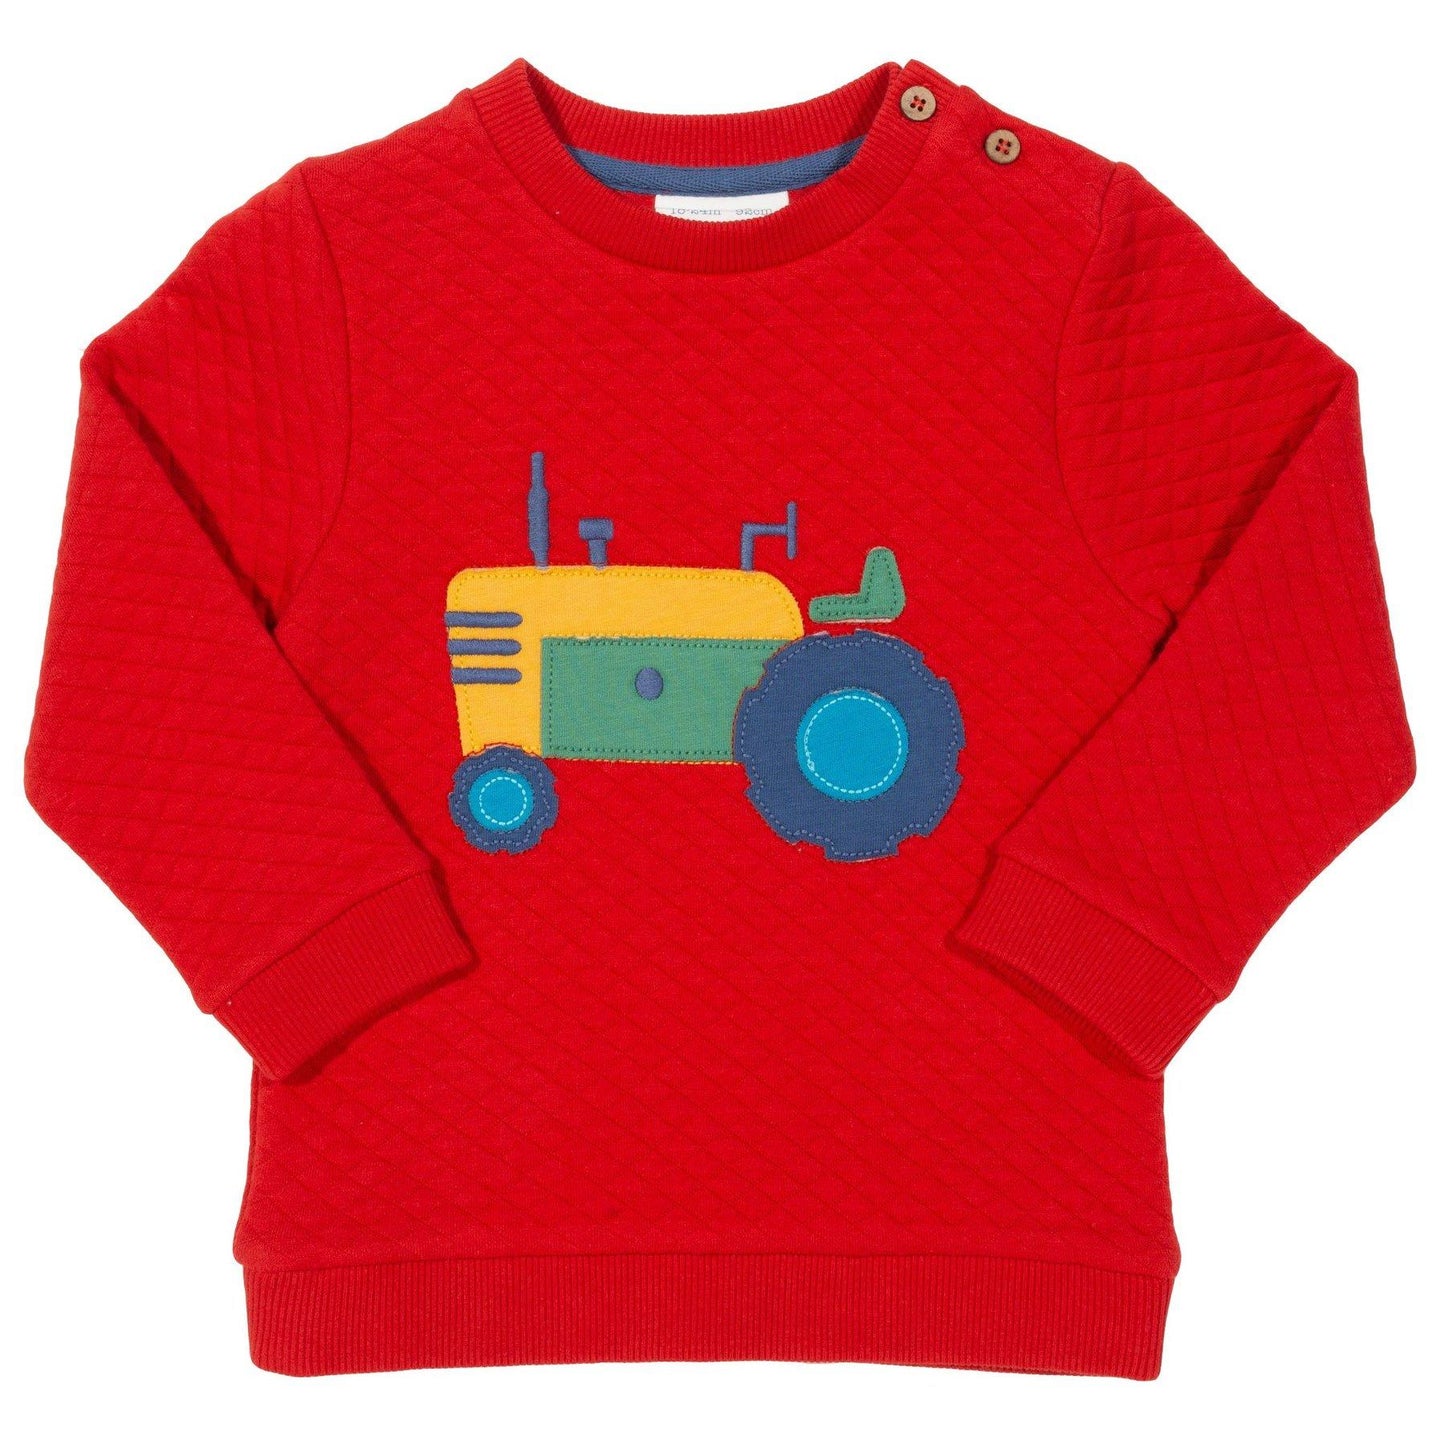 Kite quilted tractor sweatshirt